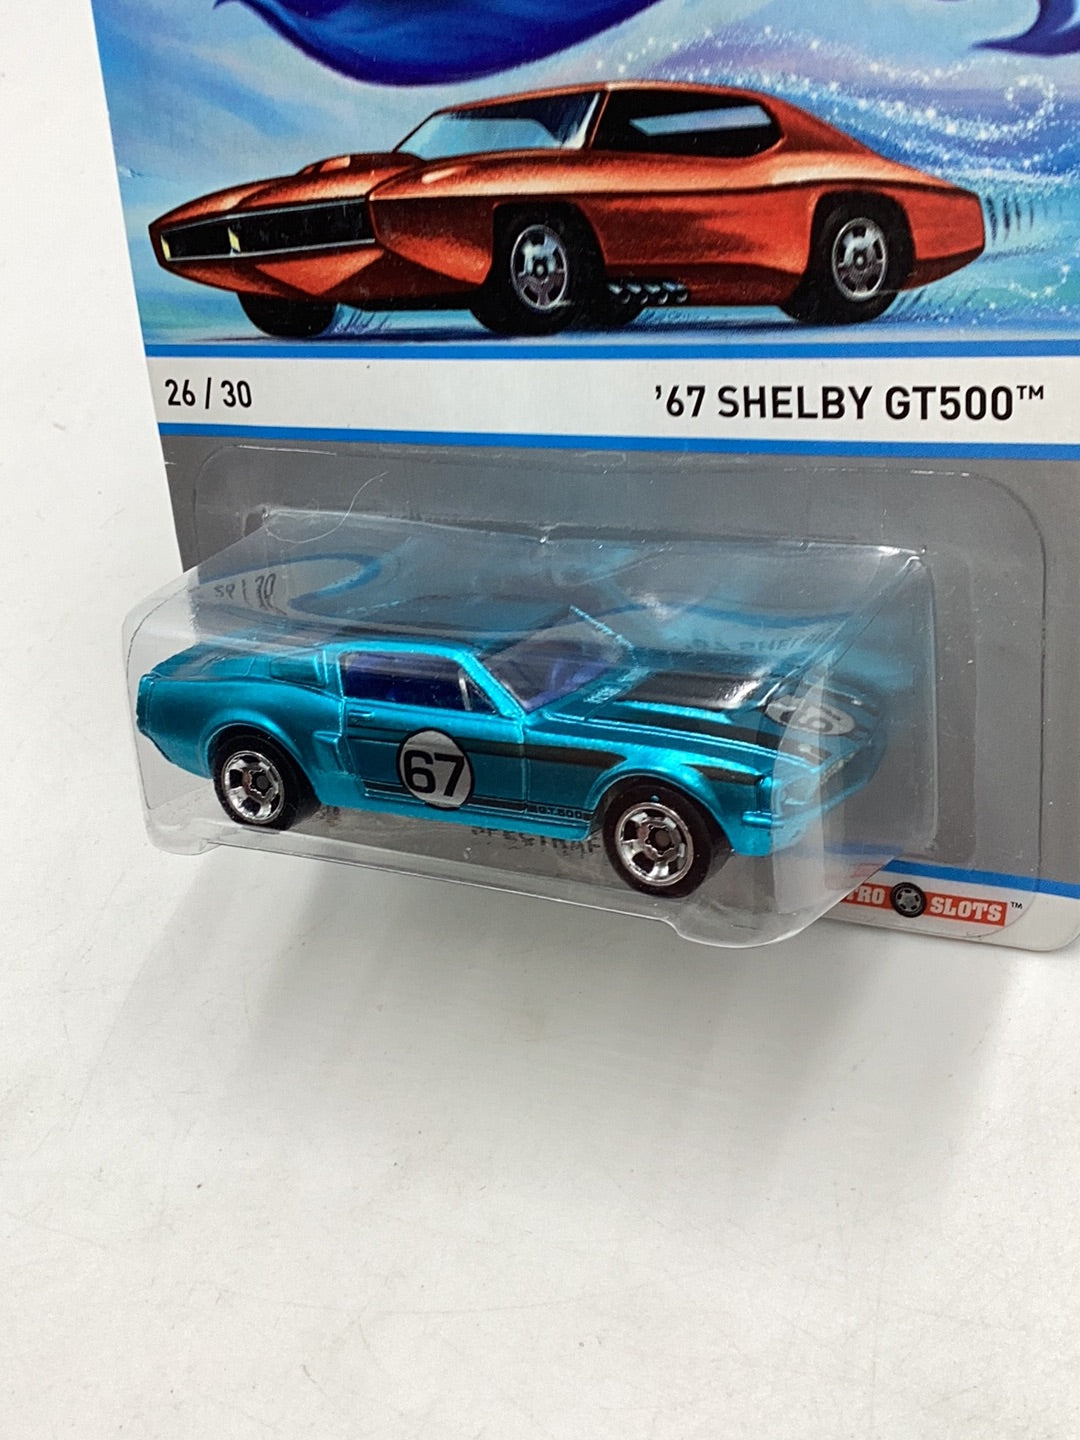 Hot wheels cool classics 67 Shelby GT500 26/30